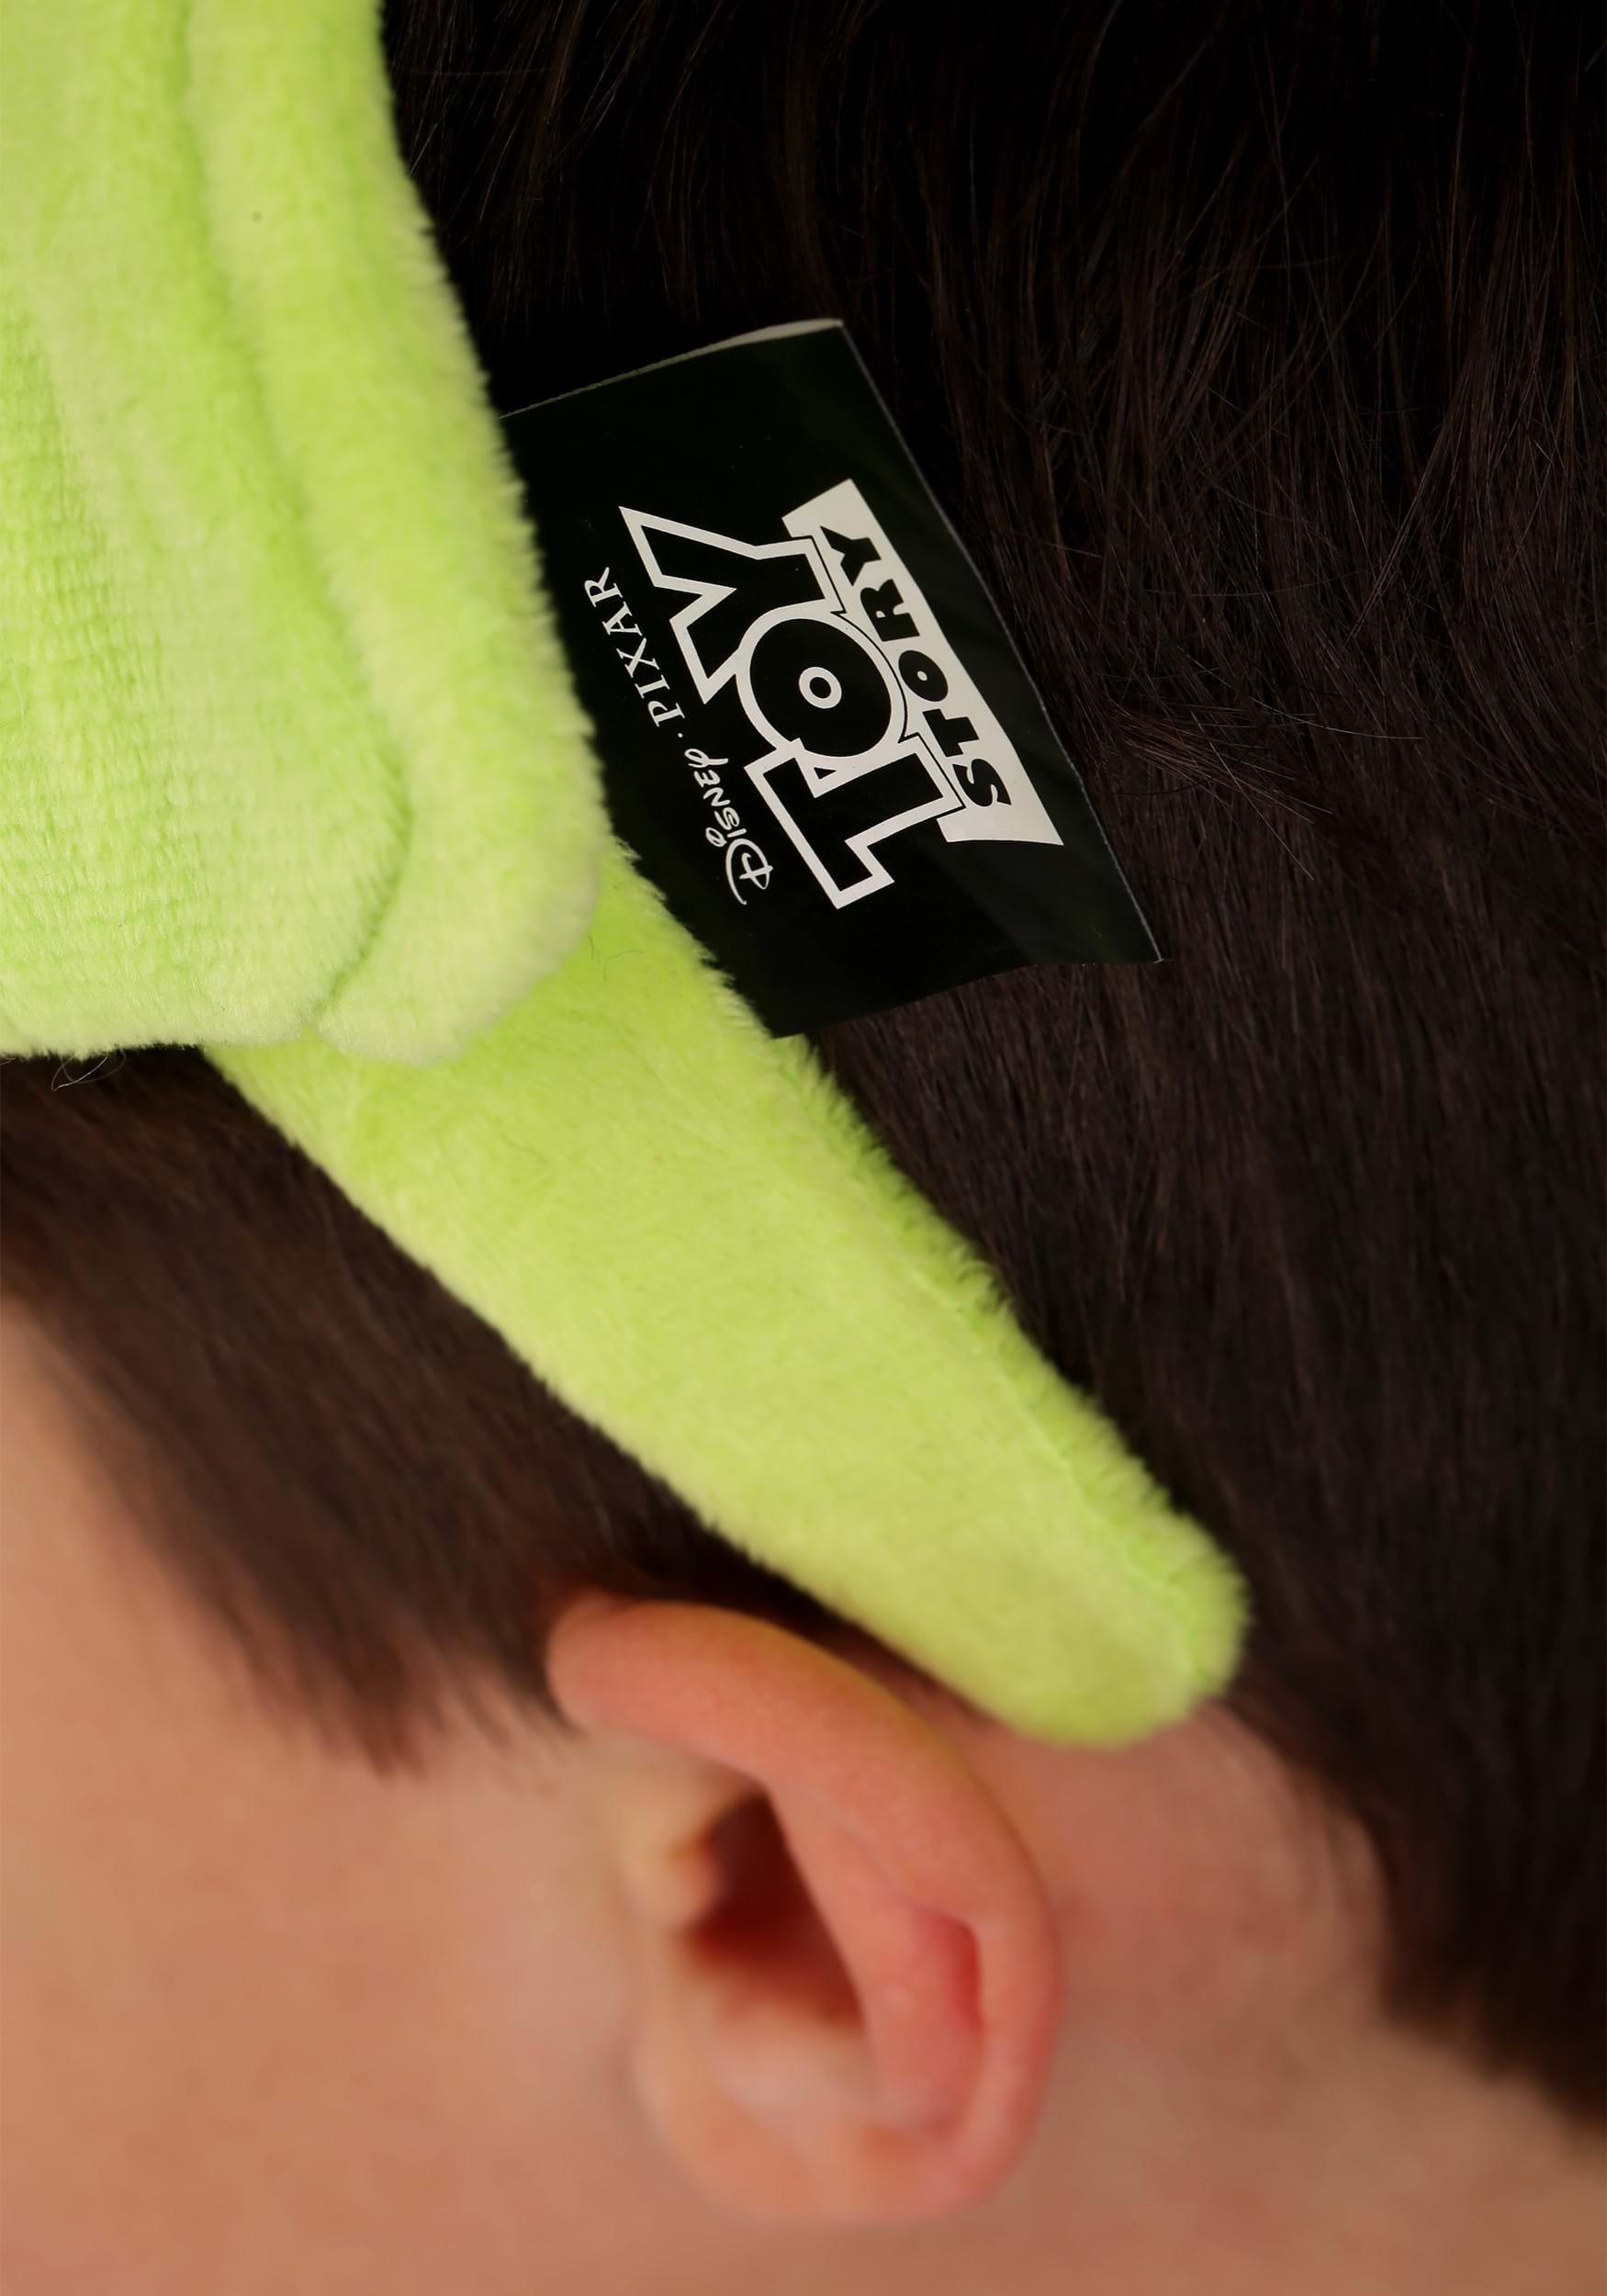 Toy Story: Alien Headband Costume , Toy Story Alien Hats